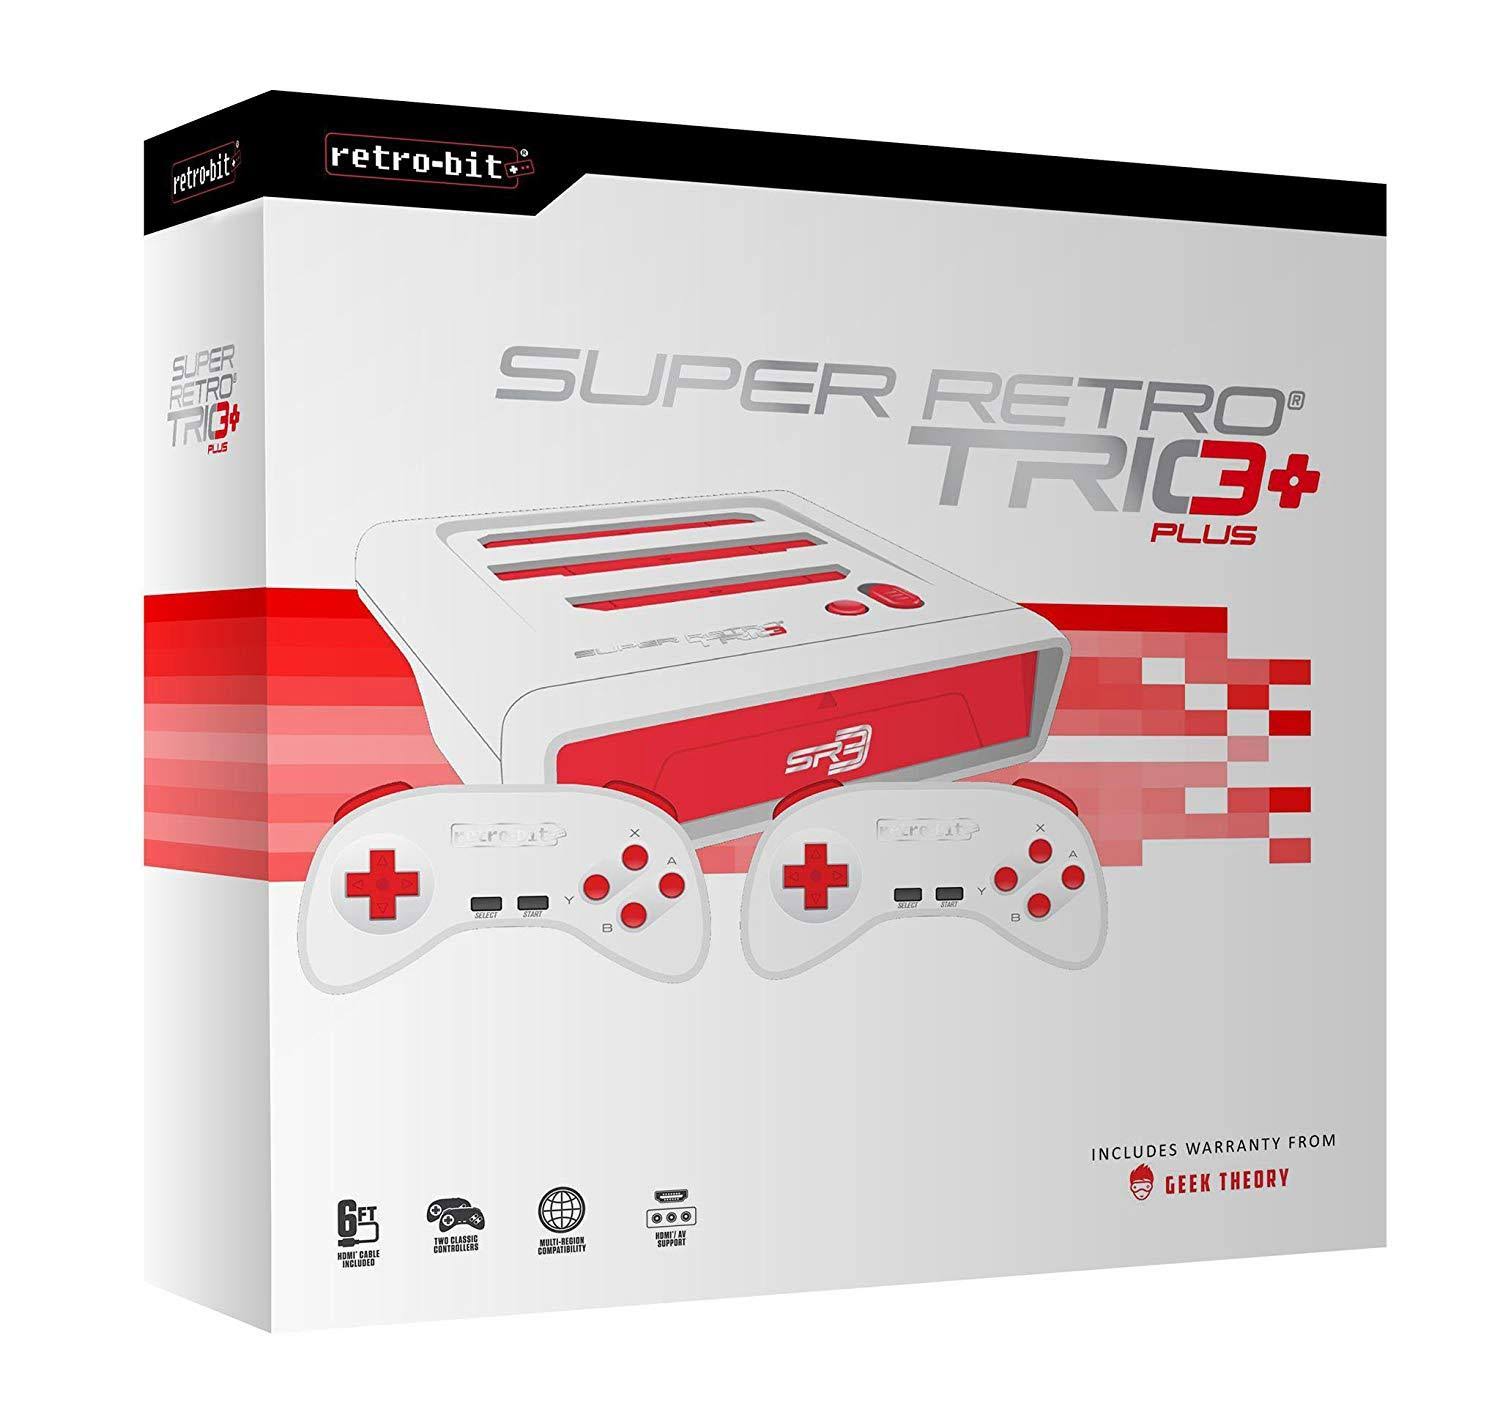 Retro-Bit Super Retro Trio HD Plus 720P 3 In 1 Console System - HDMI Port - For Original NES/SNES, Super Nintendo And Sega Genesis Games - Red/White